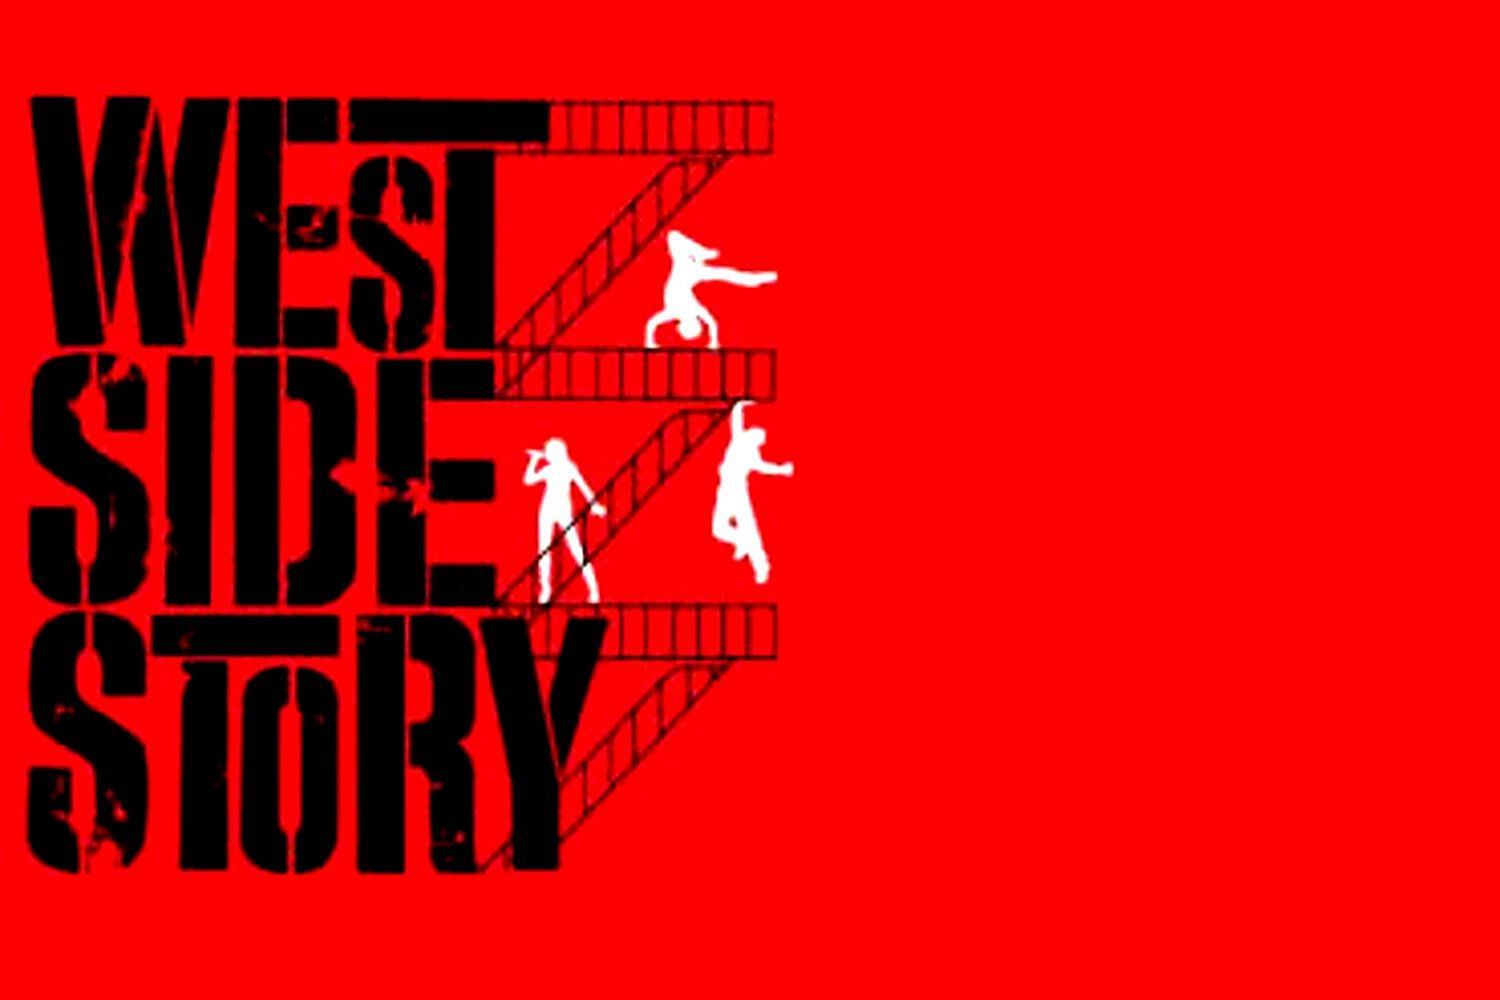 West Side Story (Image via United Artists)